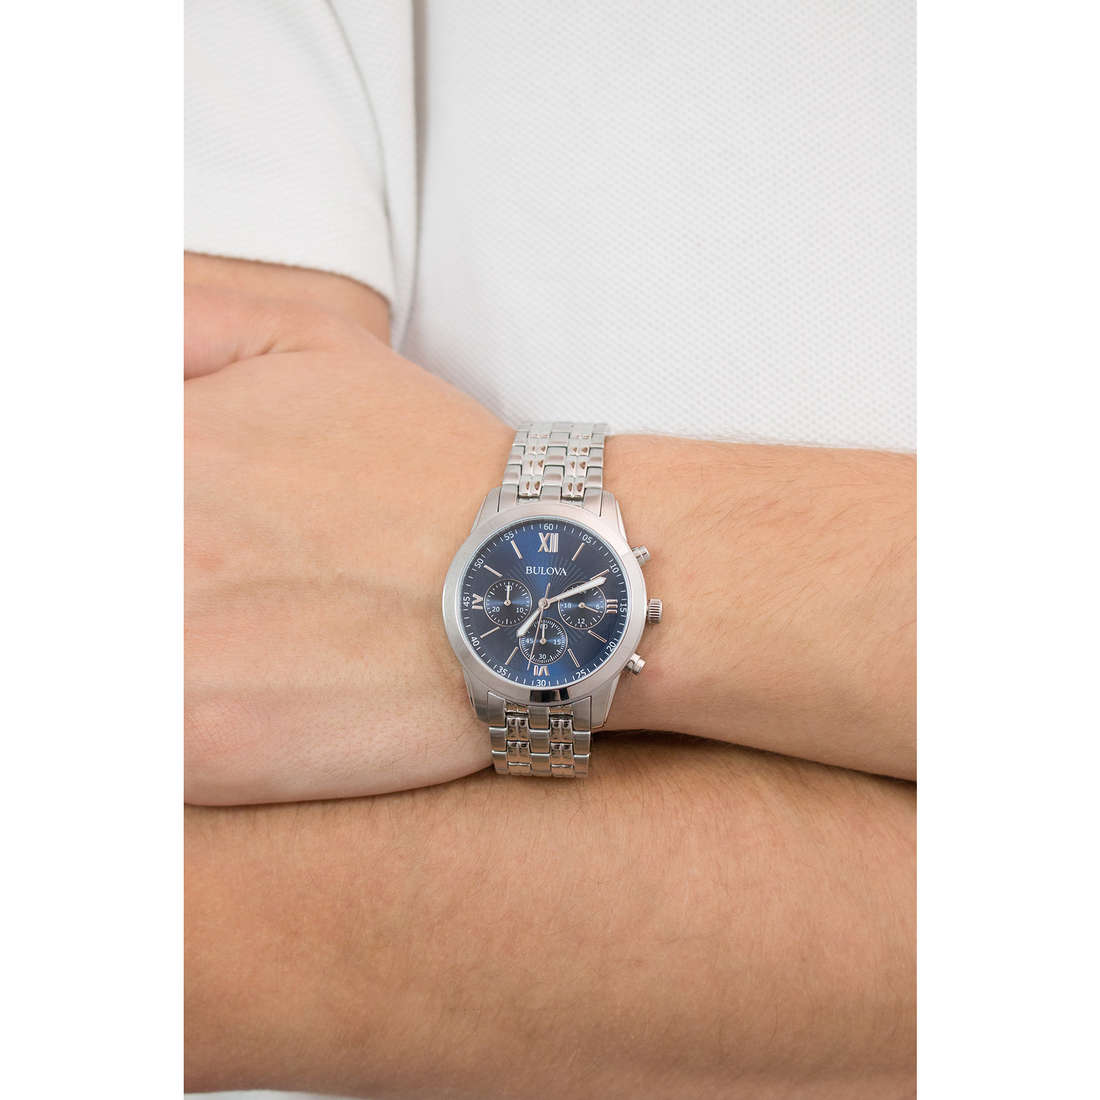 Bulova chronographs Classic man 96A174 wearing